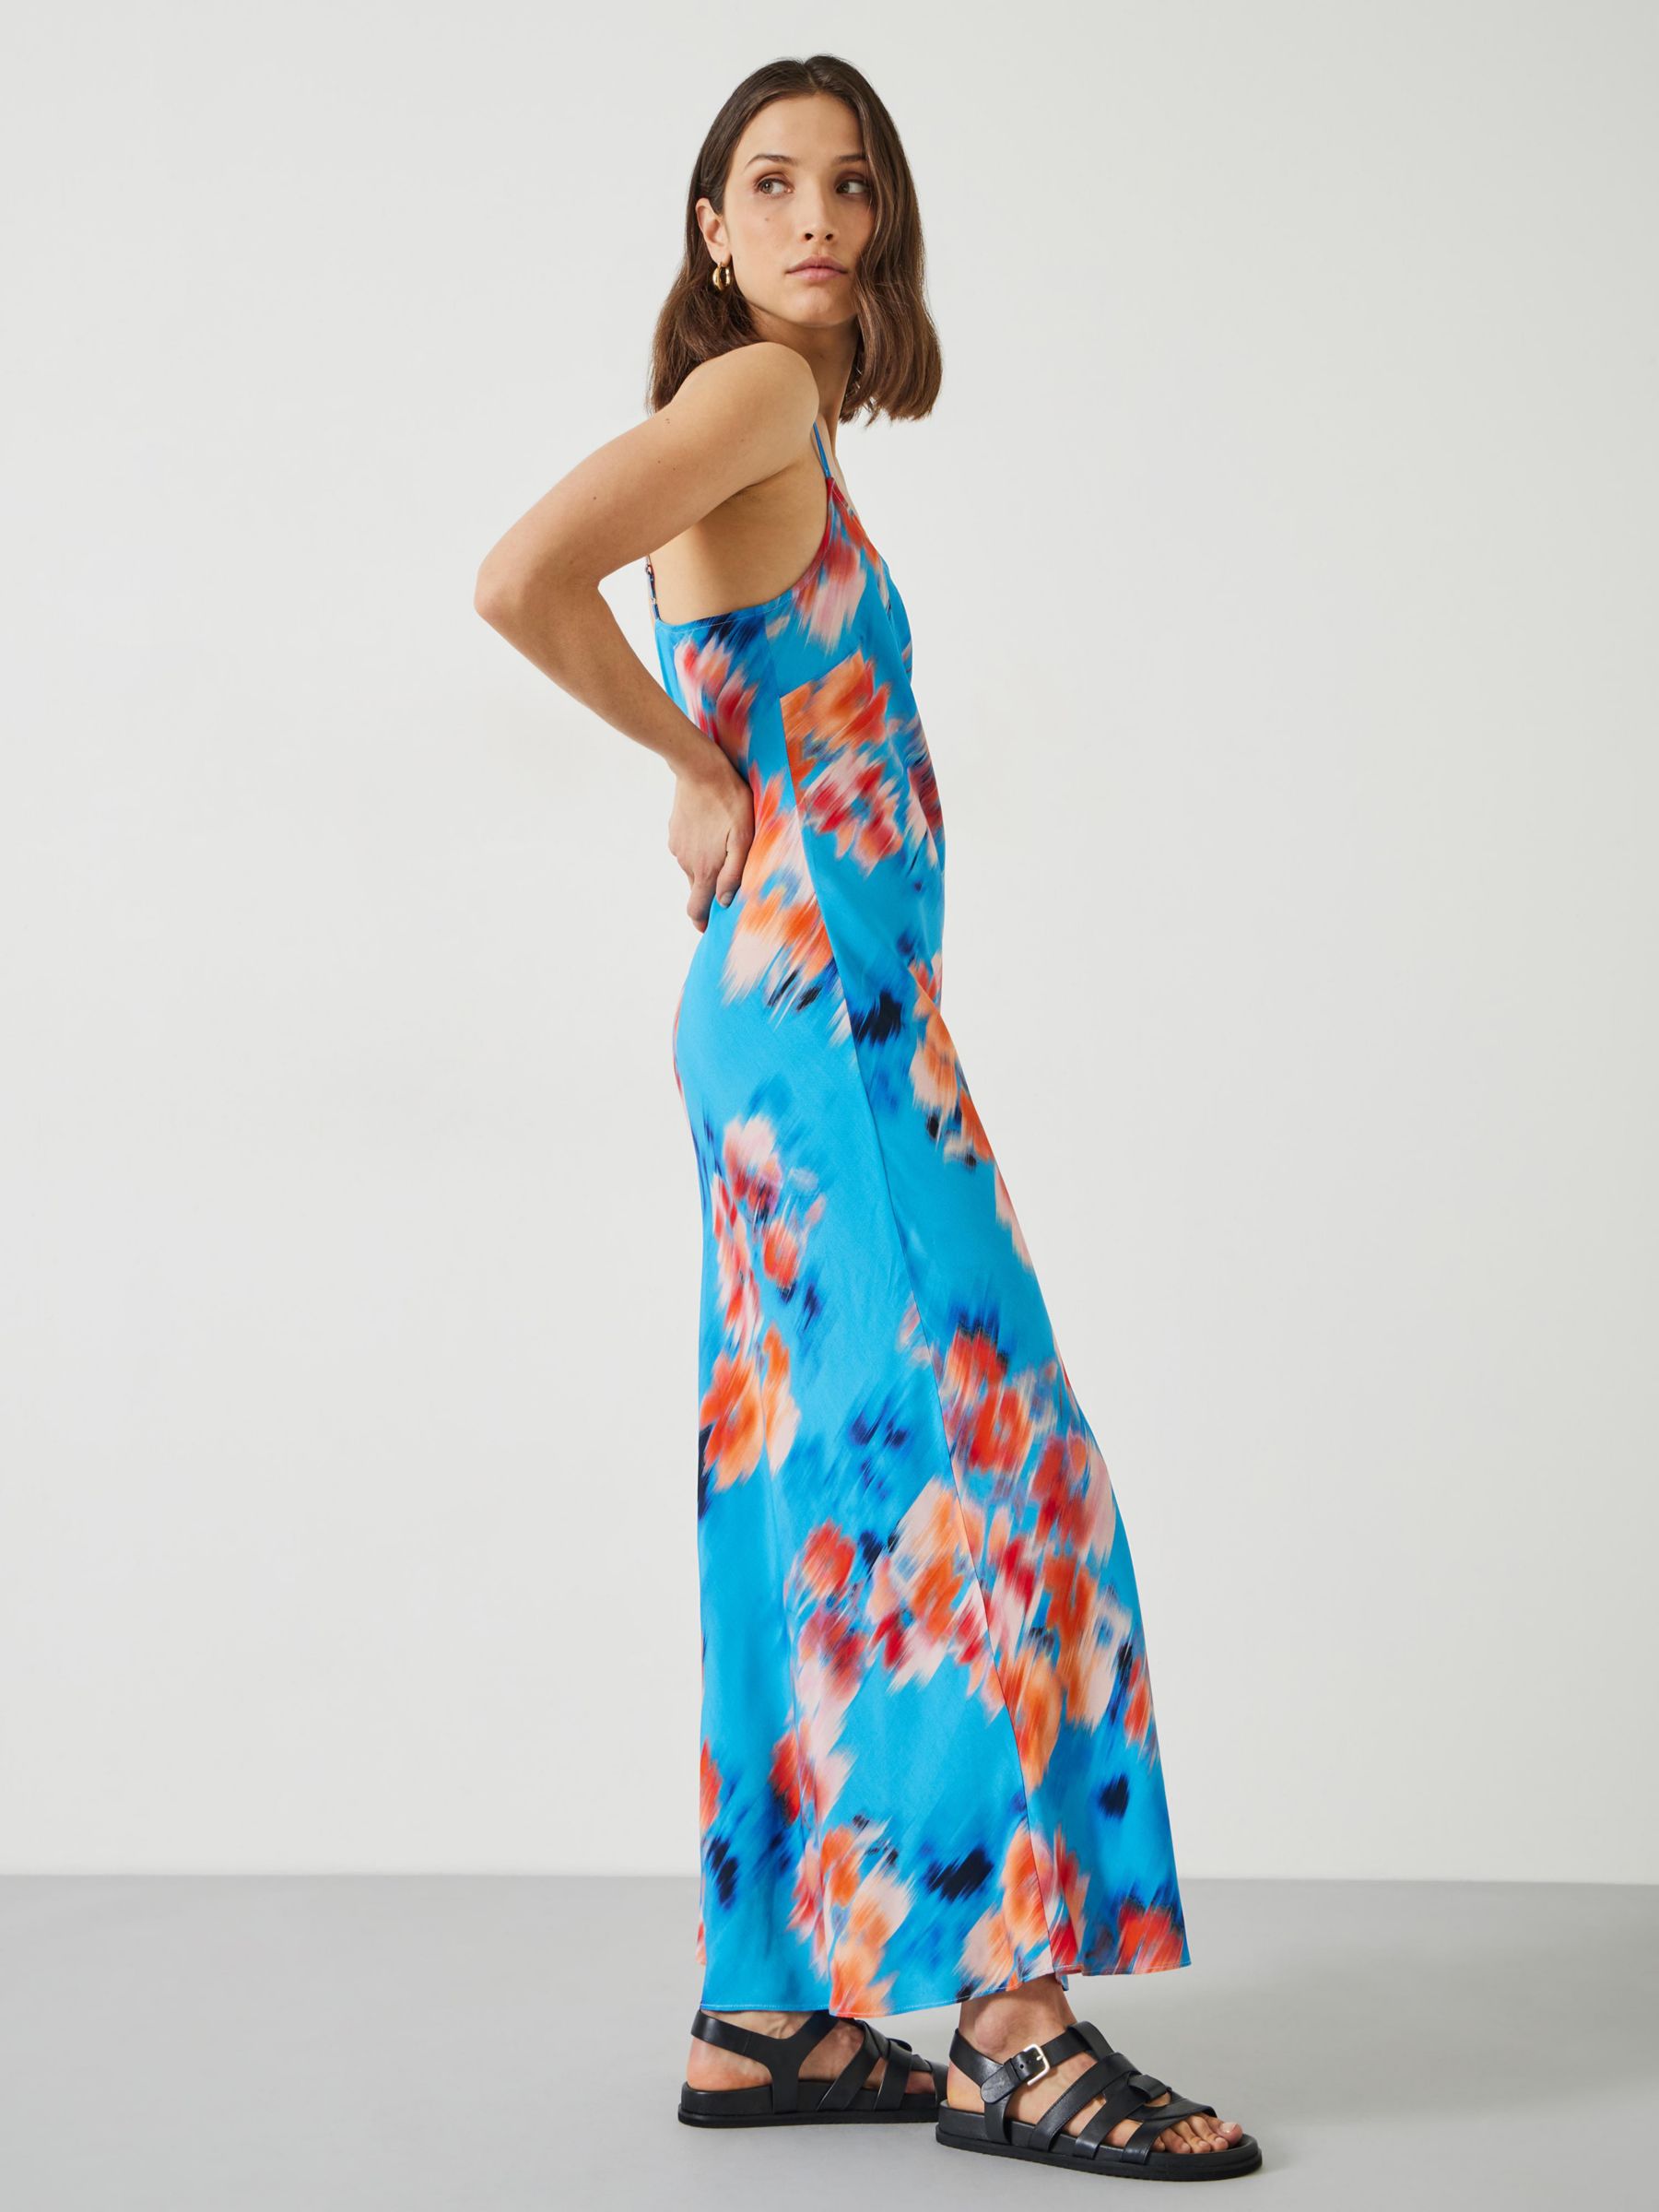 HUSH Skye Blurred Floral Print Maxi Slip Dress, Blue/Multi, 4